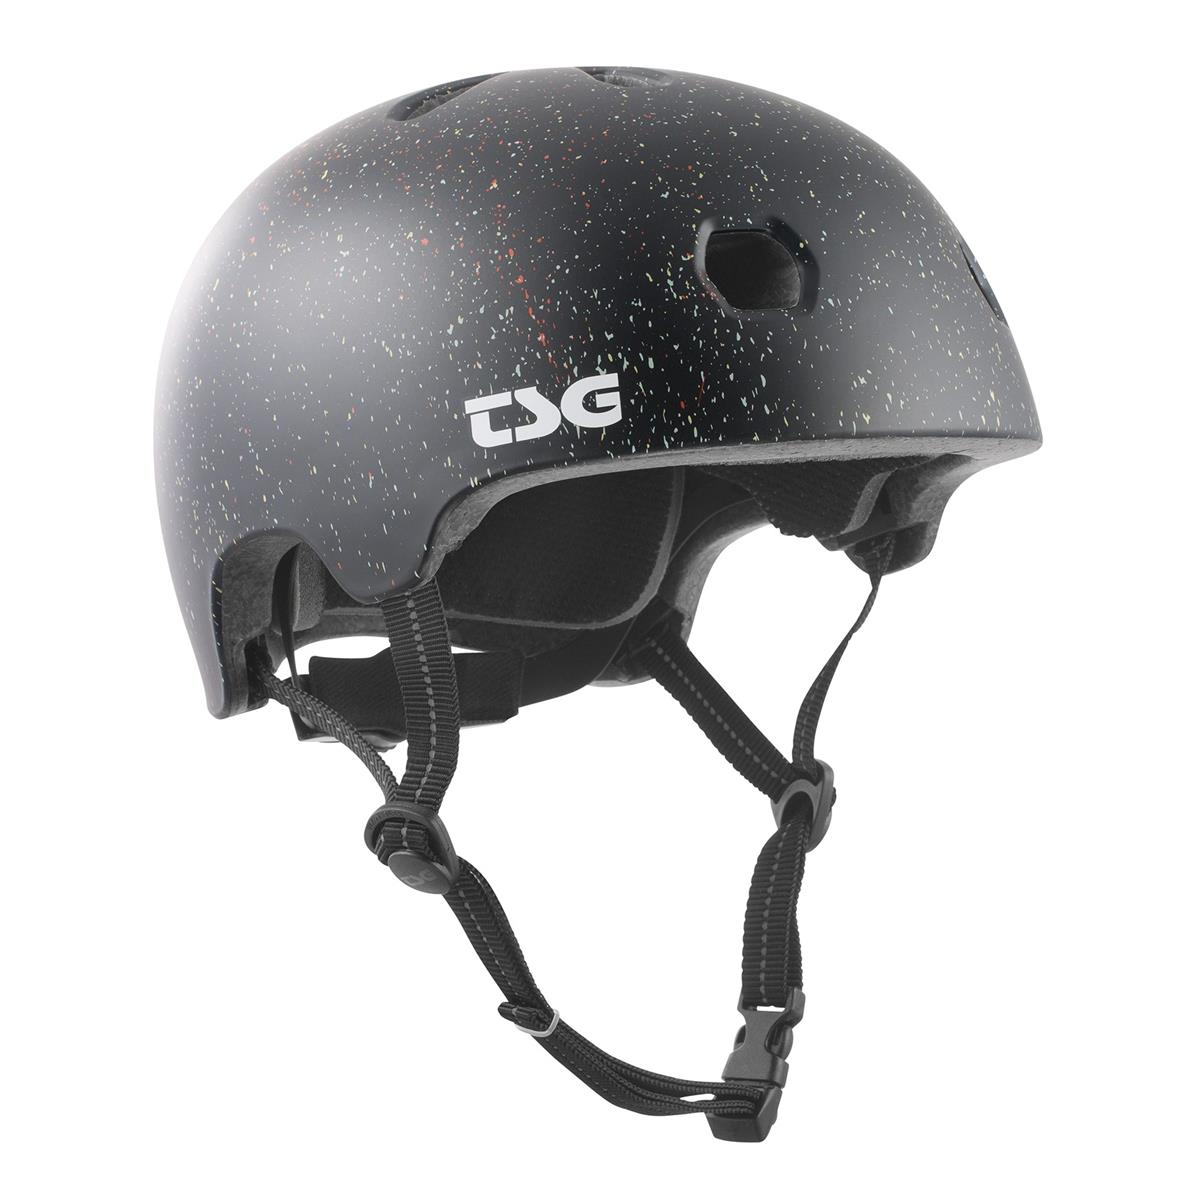 TSG BMX/Dirt Helm Meta Graphic Design - Sprayed